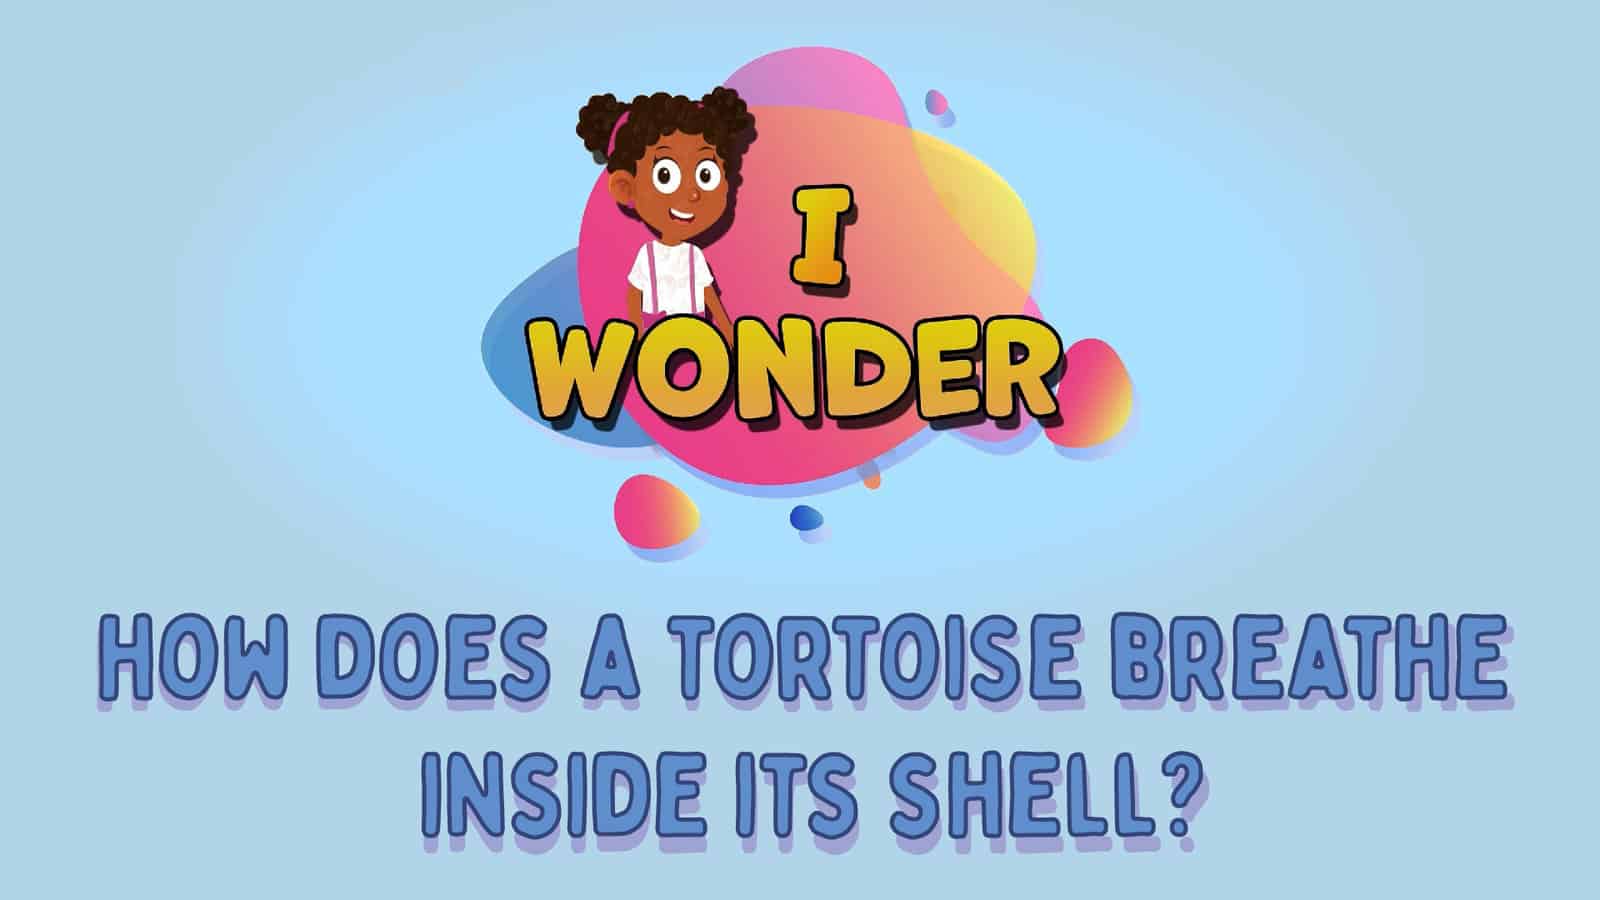 How Does A Tortoise Breathe Inside Its Shell?